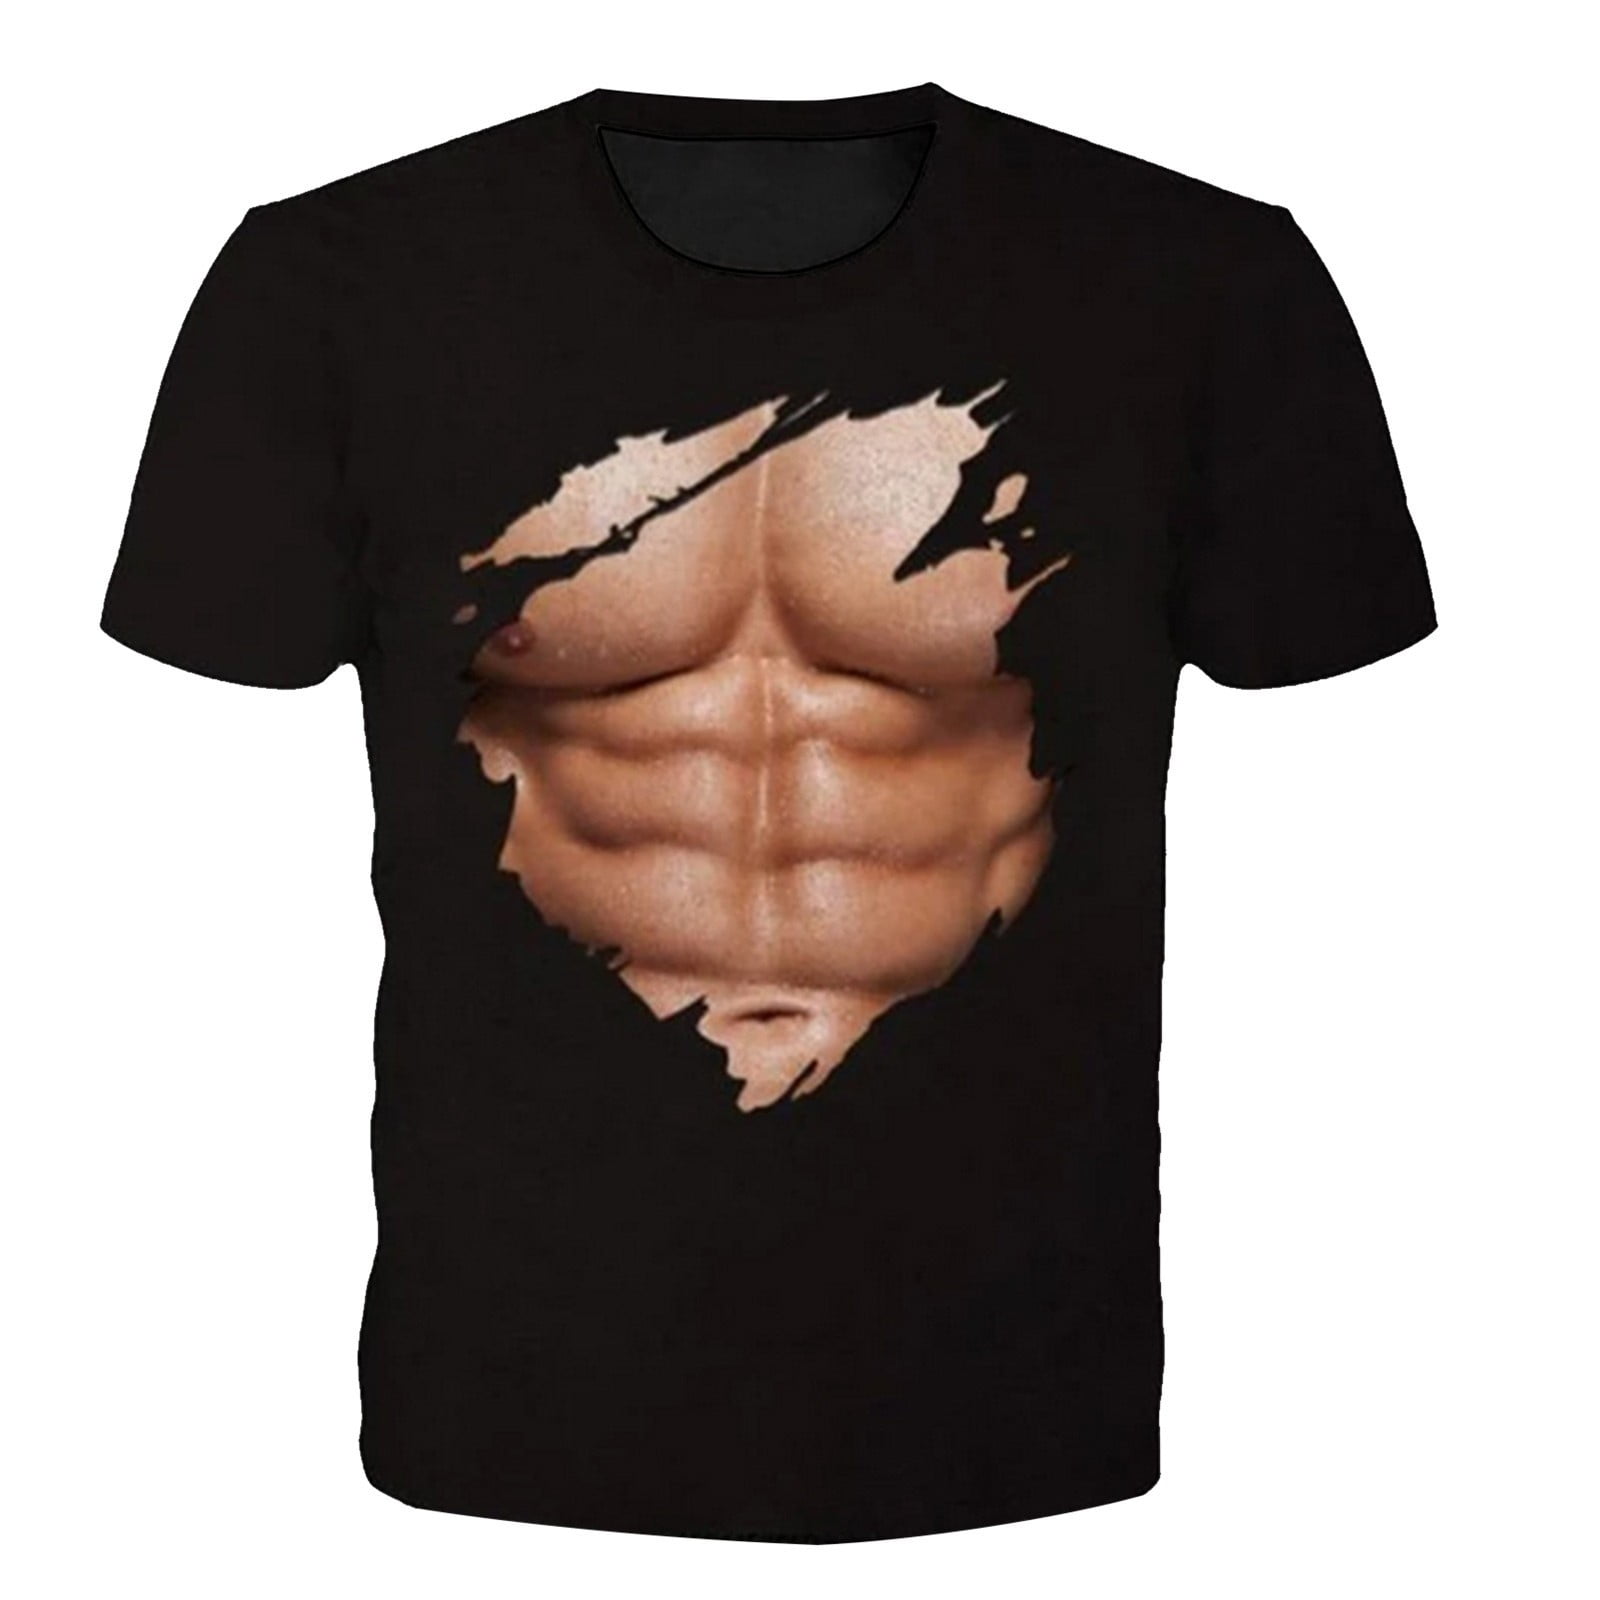 Honeeladyy Savings Men's 3D Muscle Printed Short Sleeve Shirt Novelty  Simulation Body Shirts Muscular Tough Guy T-Shirt Toned Body Tops 